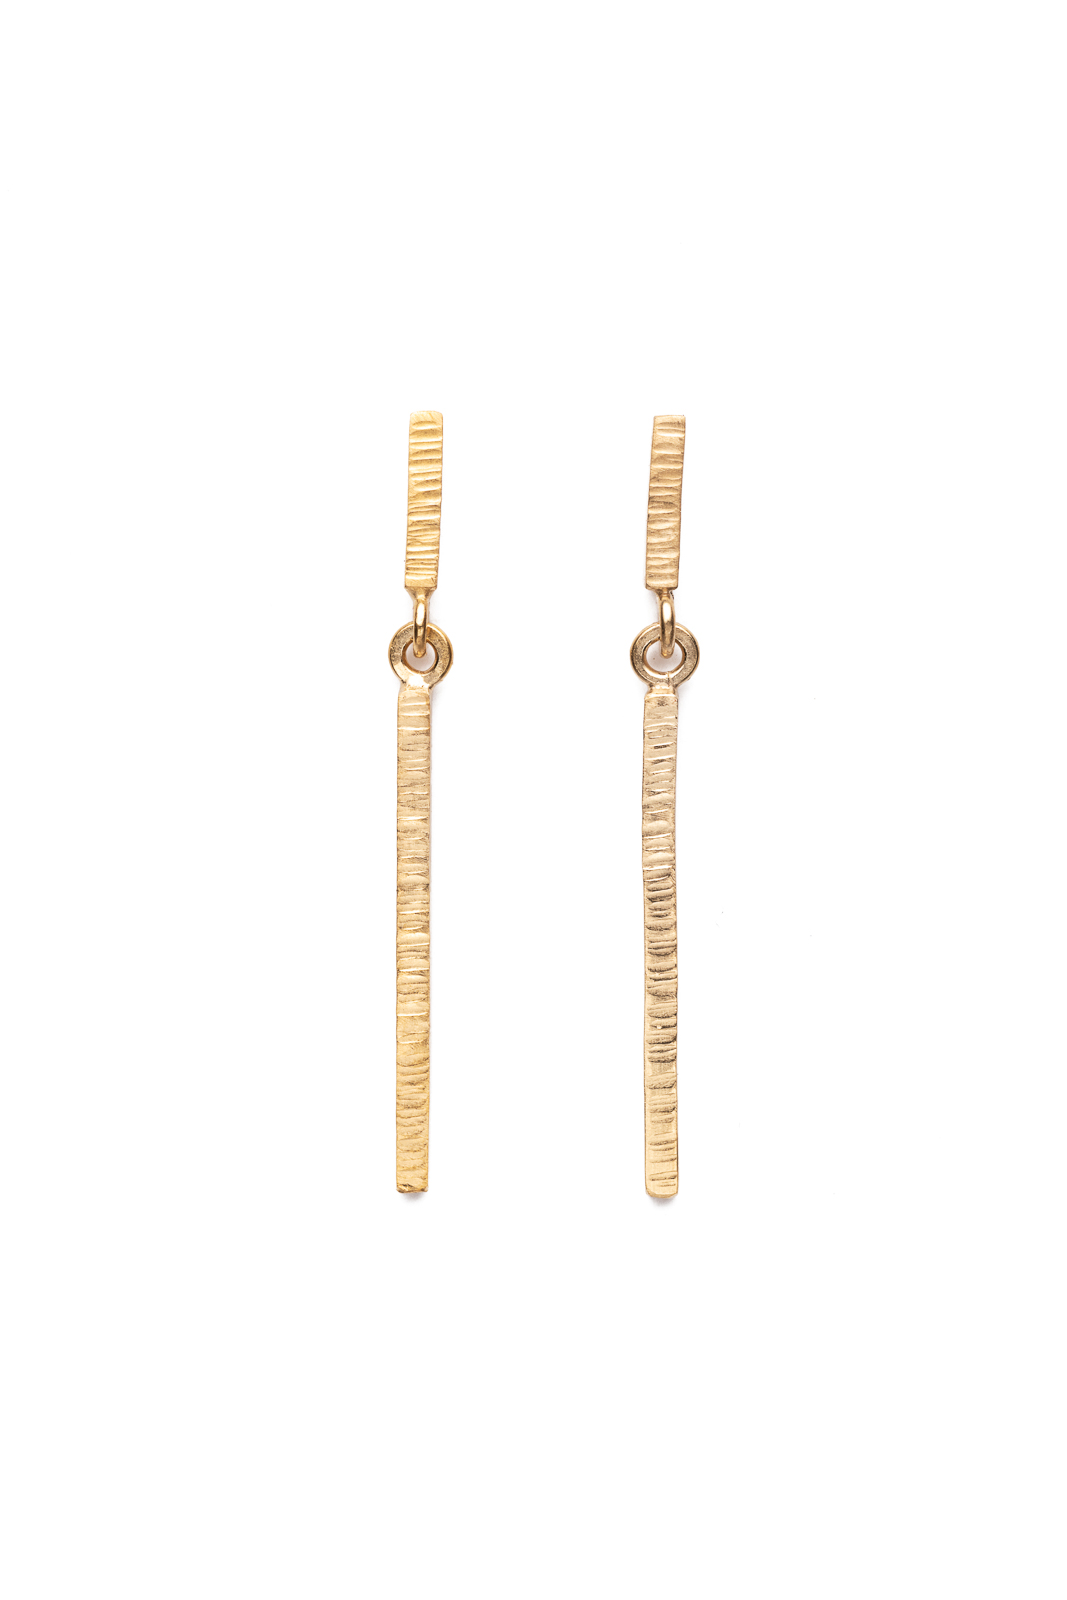 Blackbird Jewellery 9ct Gold Vermeil High Line Drop Bar Stud Earrings